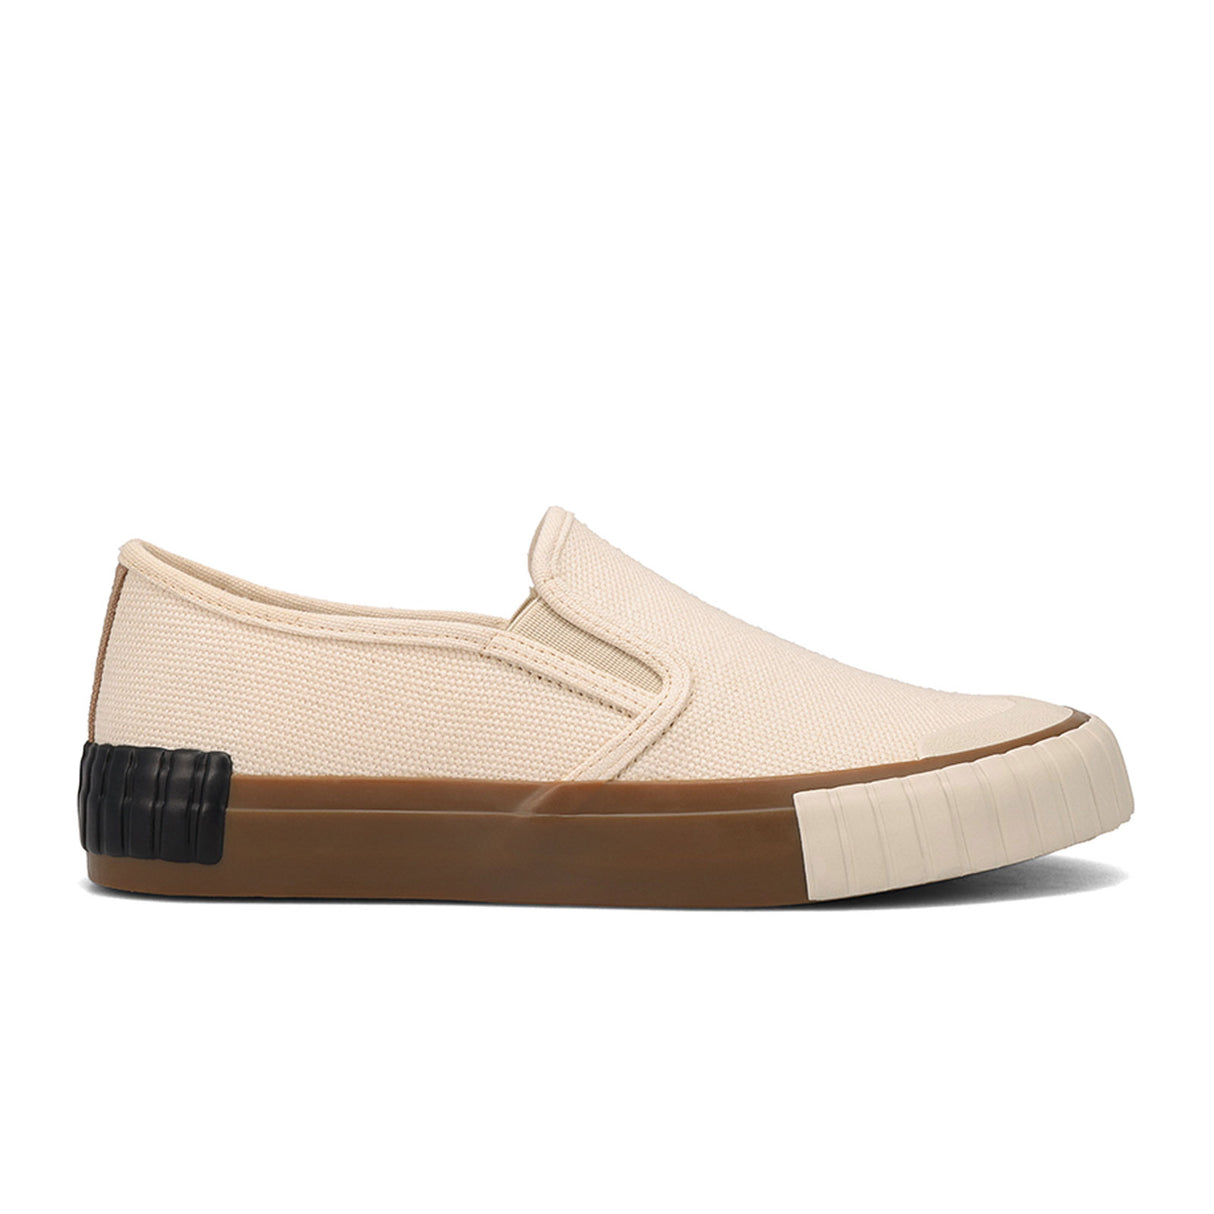 Taos Double Vision Slip On Sneaker (Women) - Cream Dress-Casual - Slip-Ons - The Heel Shoe Fitters